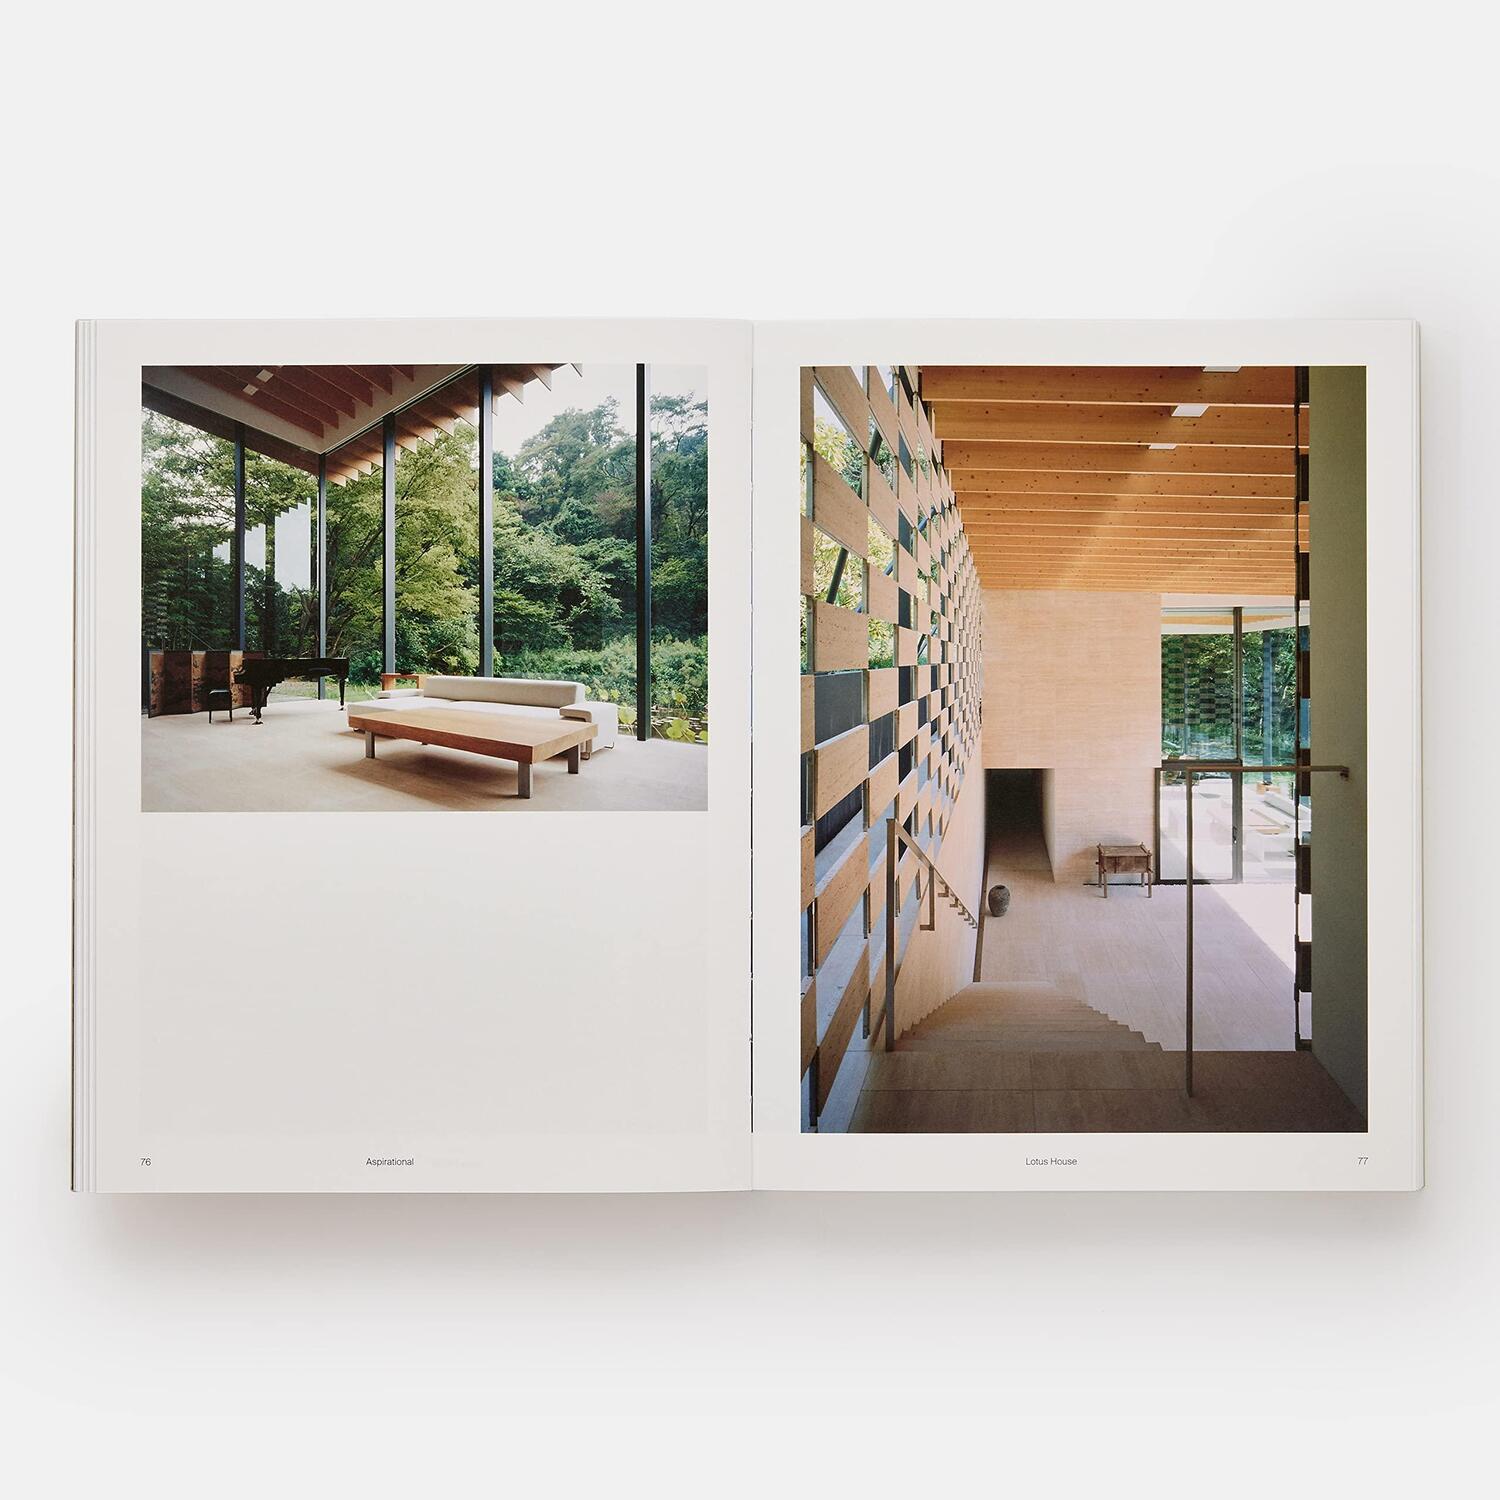 Bild: 9781838663995 | Japanese Interiors | Mihoko Iida | Buch | 256 S. | Englisch | 2022